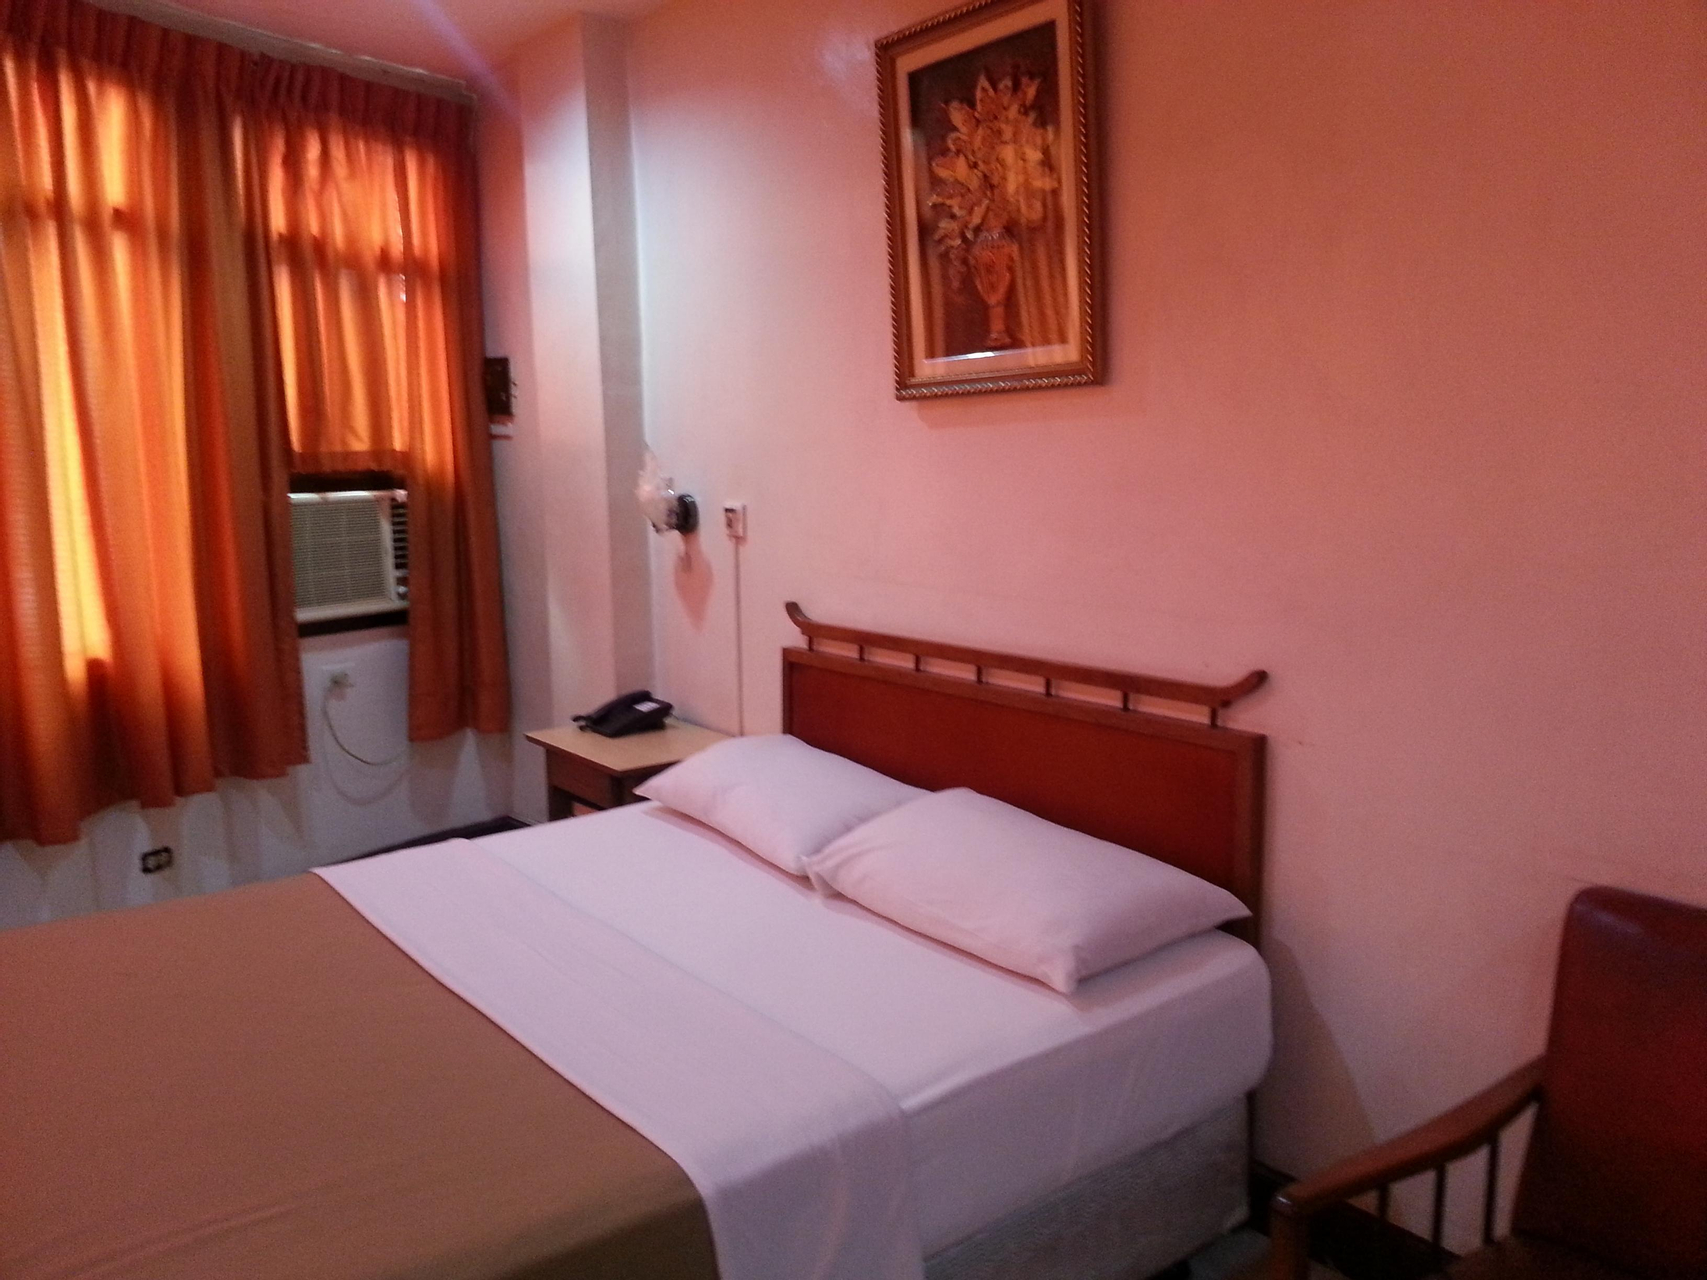 Bedroom 2, Best Fortune Hotel, Manila